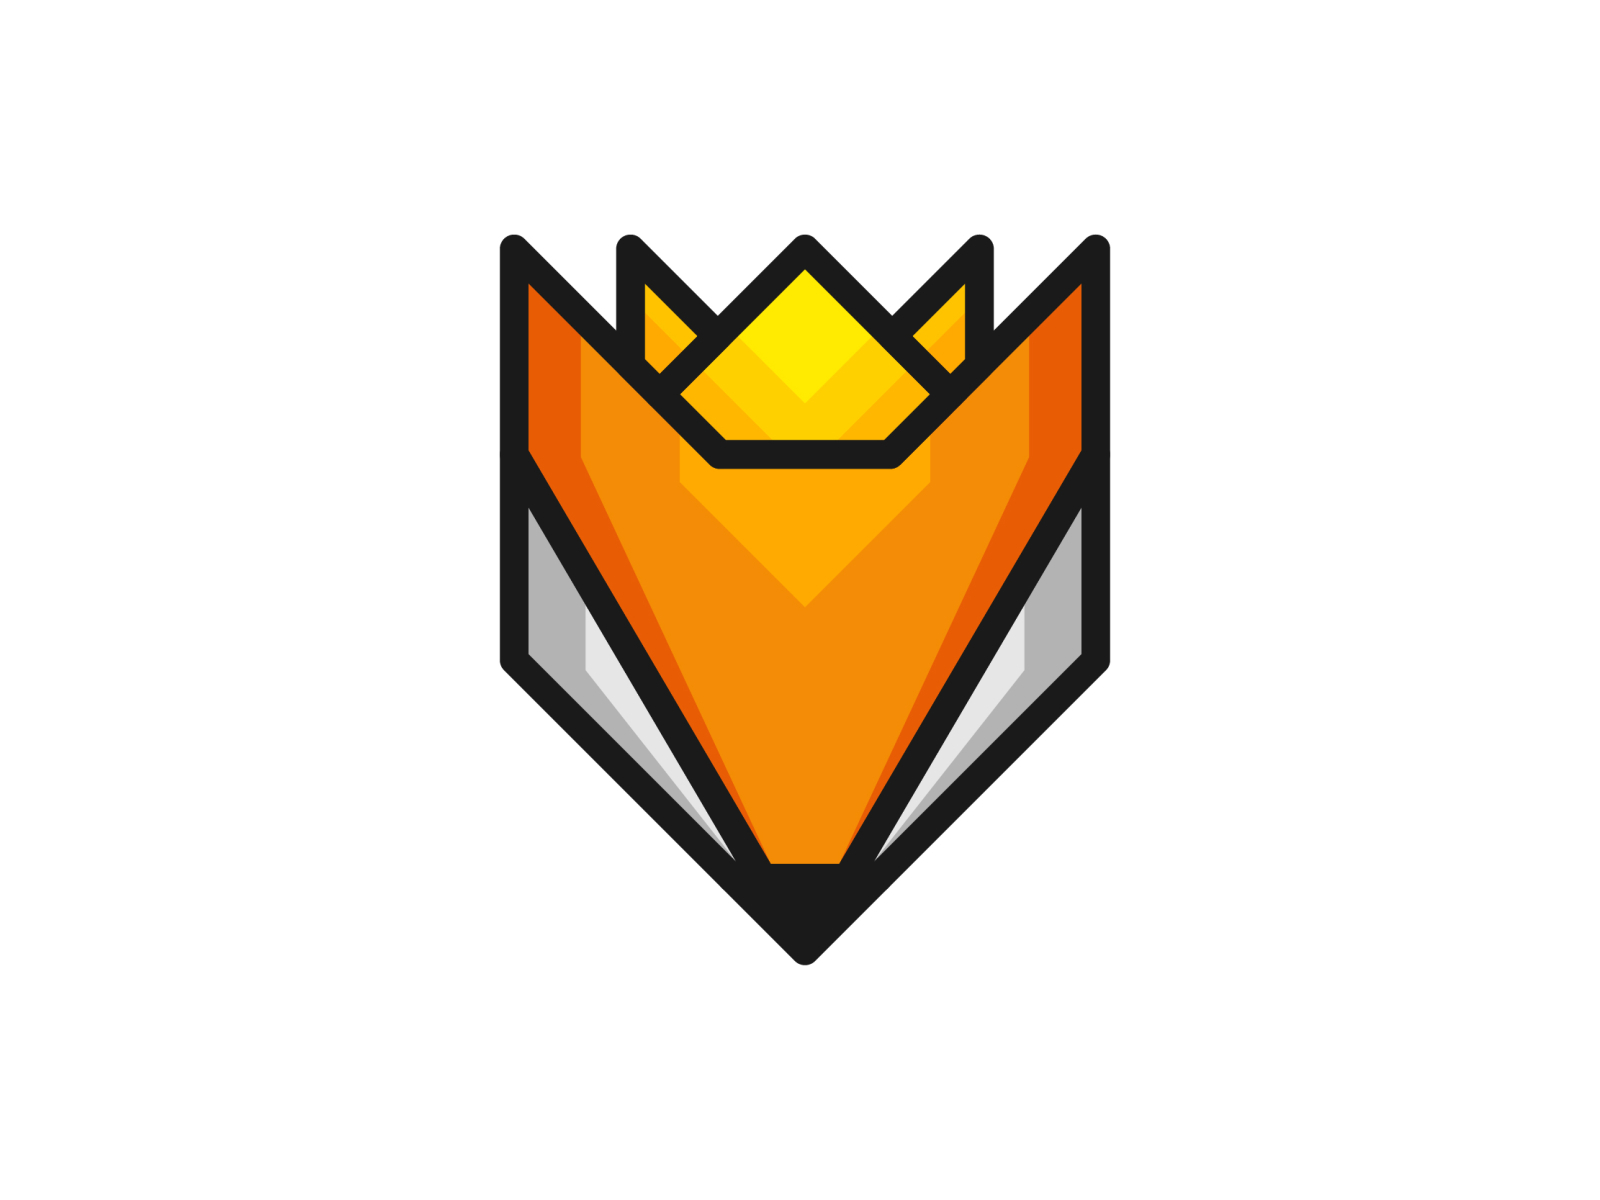 Fox King Logo by Vieri Agustian on Dribbble